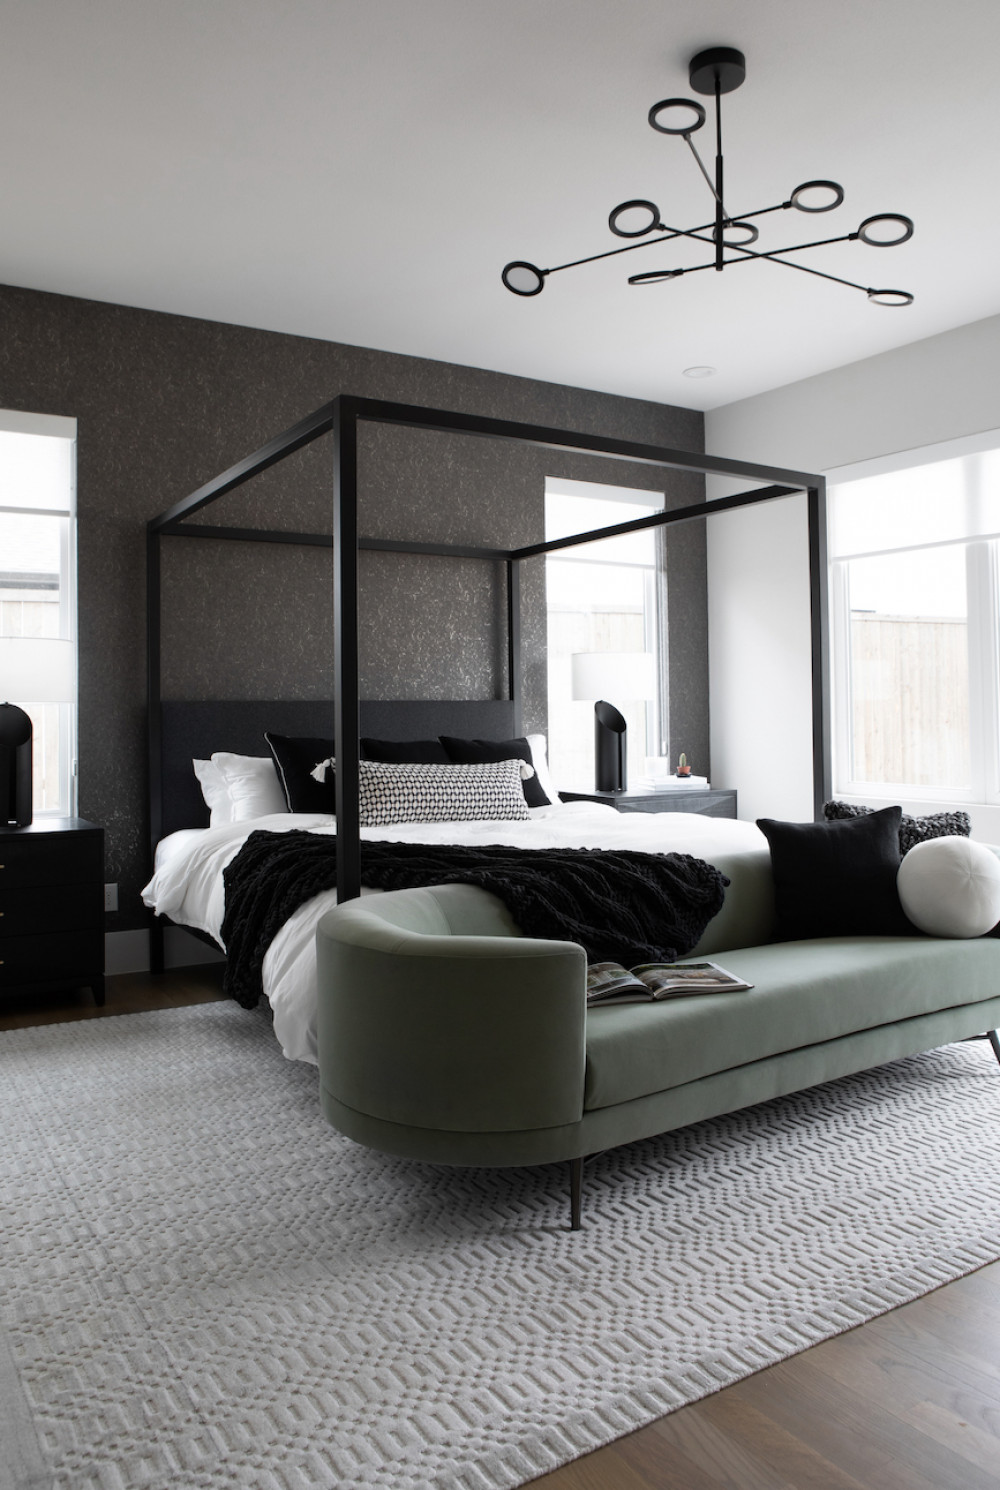 beyond-interior-design-bedroom-design-area-rug-black-gray-accent-wall